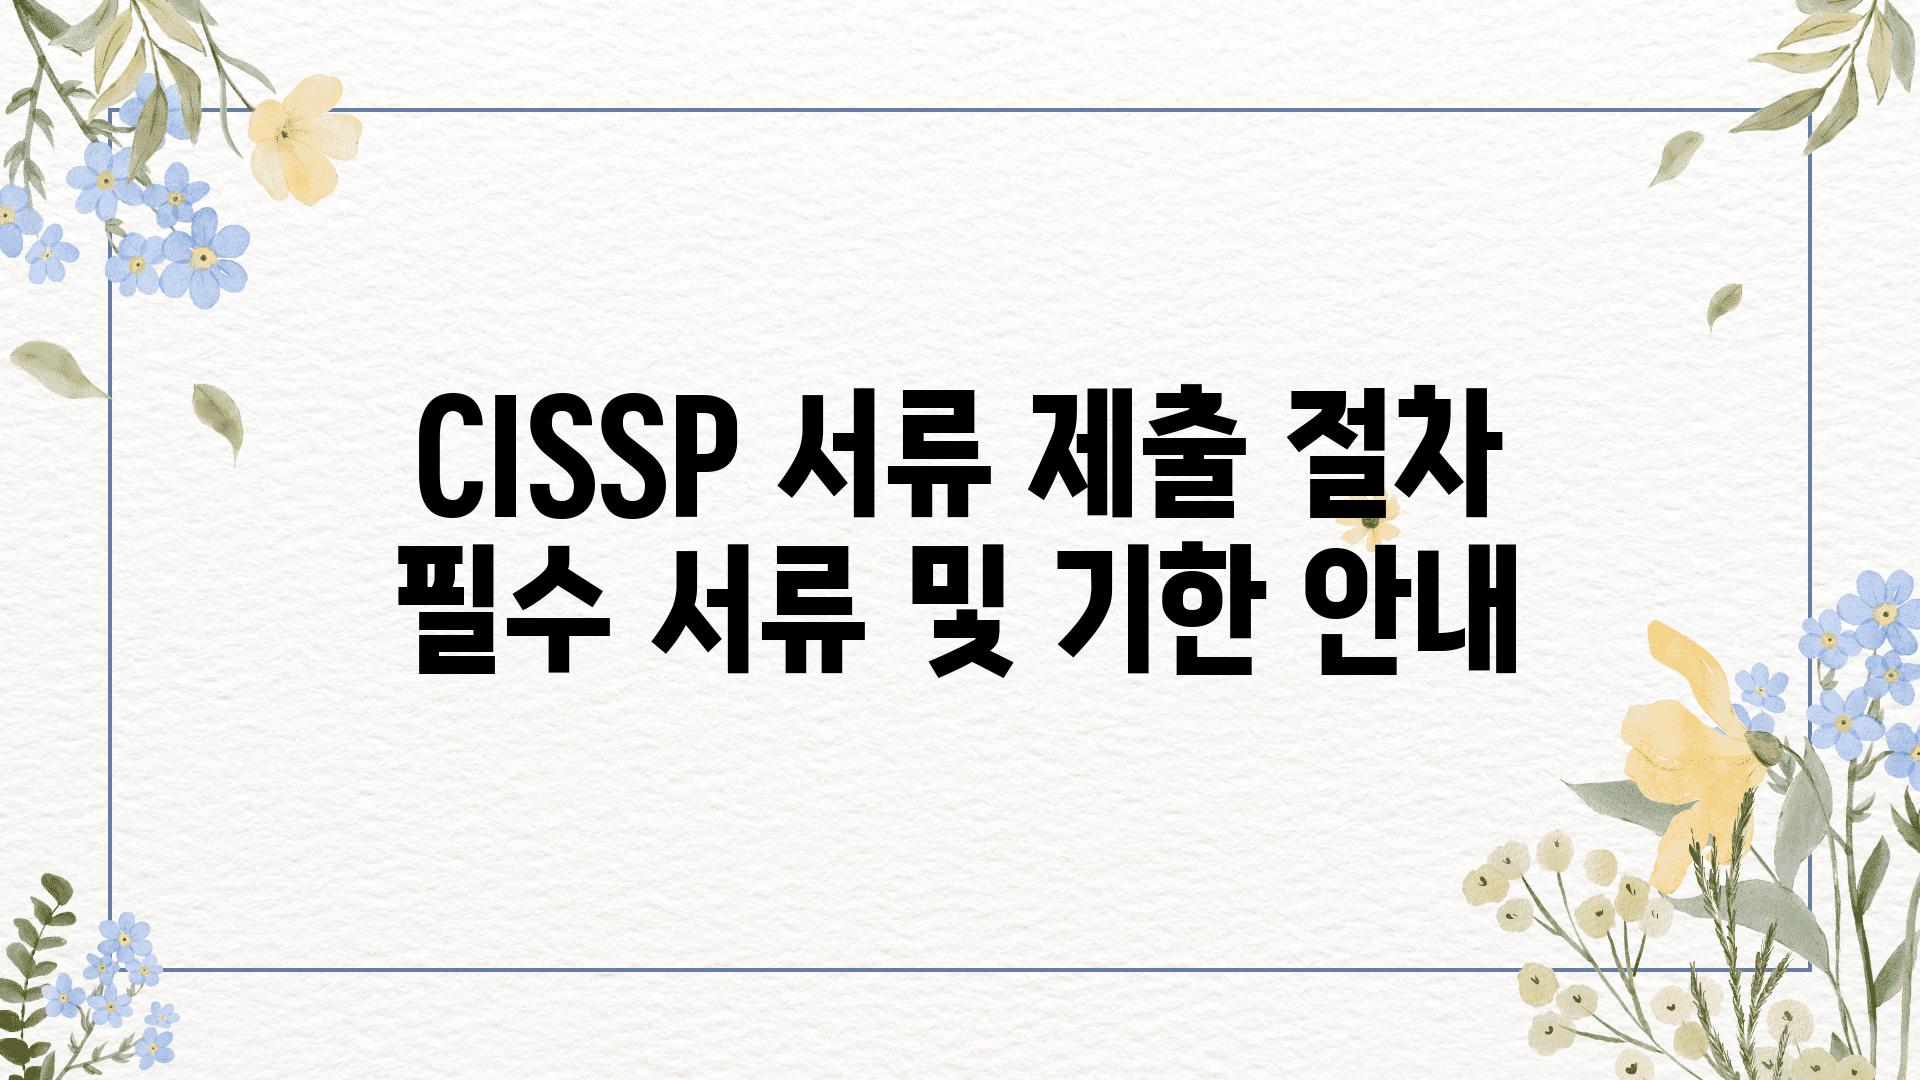 CISSP 서류 제출 절차 필수 서류 및 기한 공지